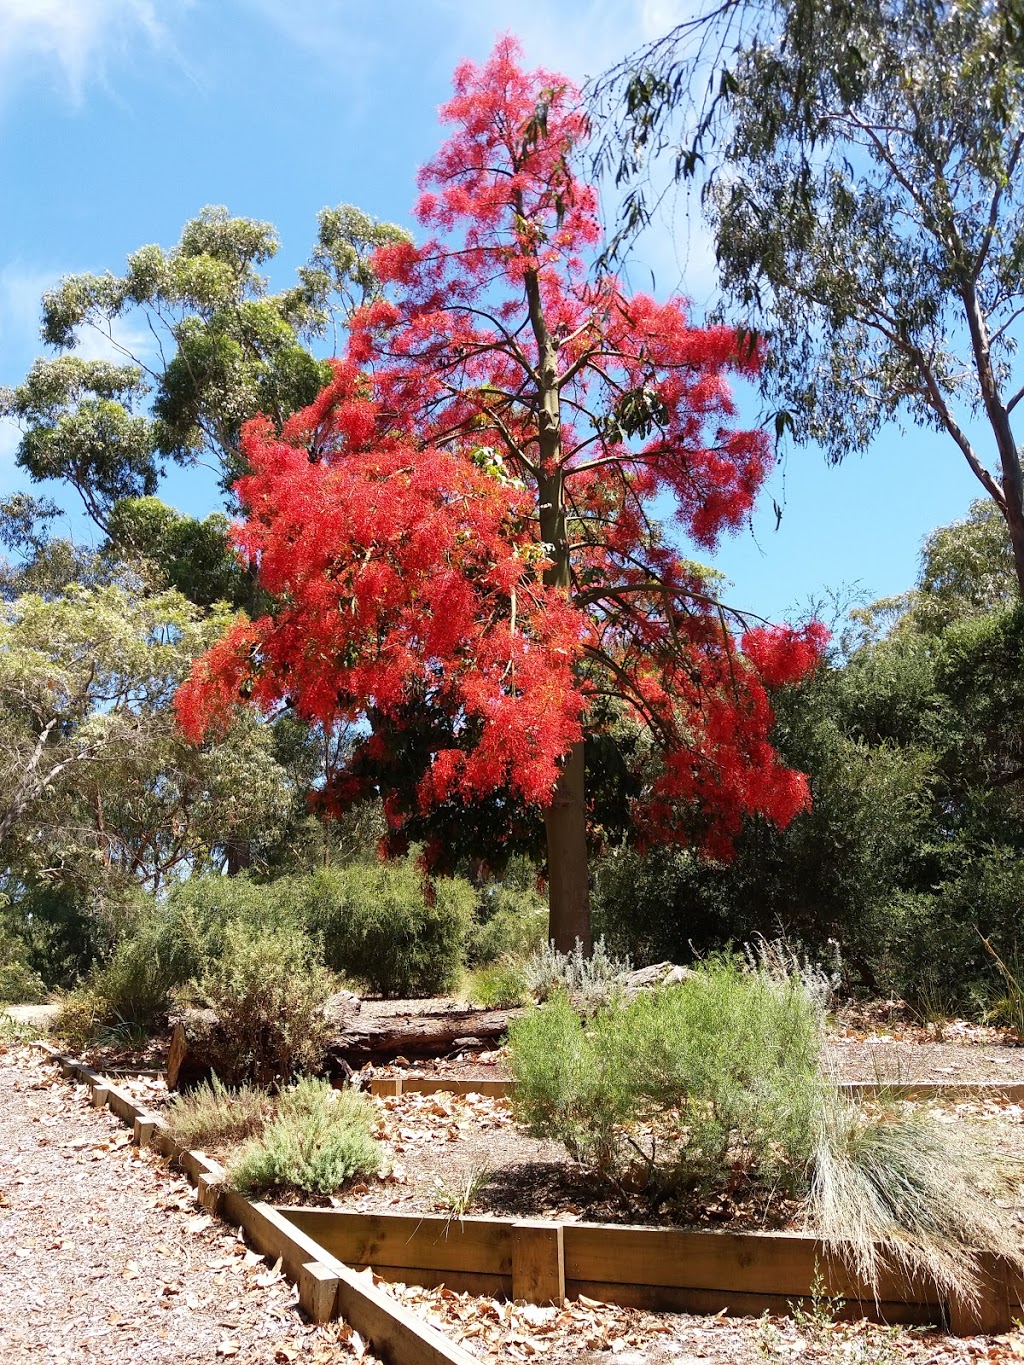 George Pentland Botanic Gardens | 41N Williams St, Frankston VIC 3199, Australia | Phone: 1300 322 322